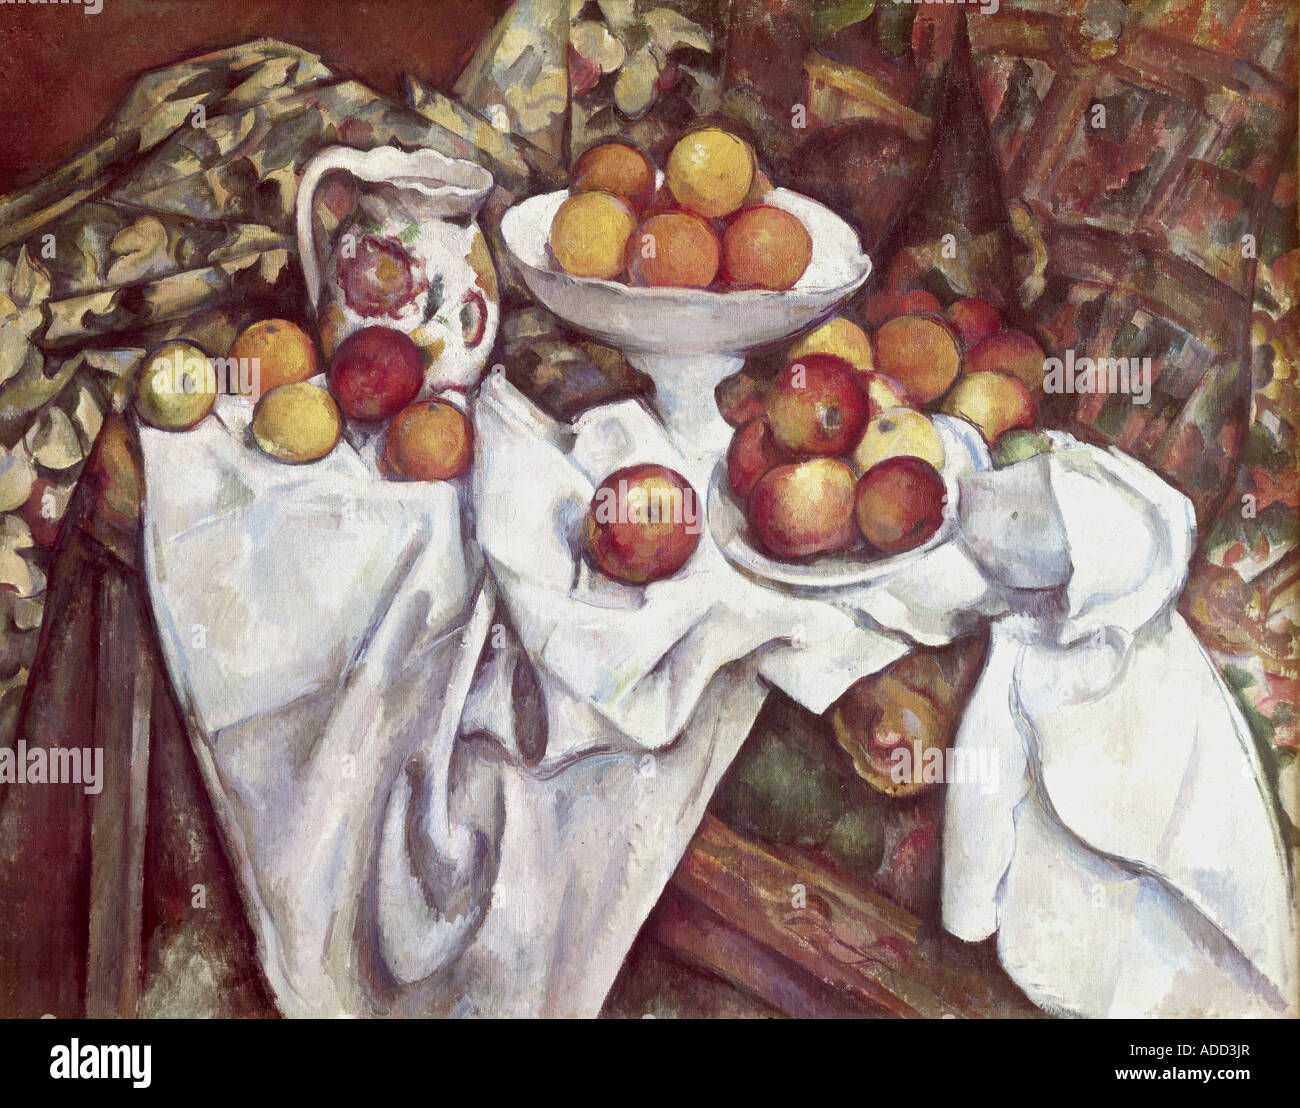 "Fine Arts, Cezanne, Paul (1839-1906), Malerei,"Äpfel und Orangen", 1895-1900, Öl auf Leinwand, Musée d' Orsay, Paris, Fr Stockfoto